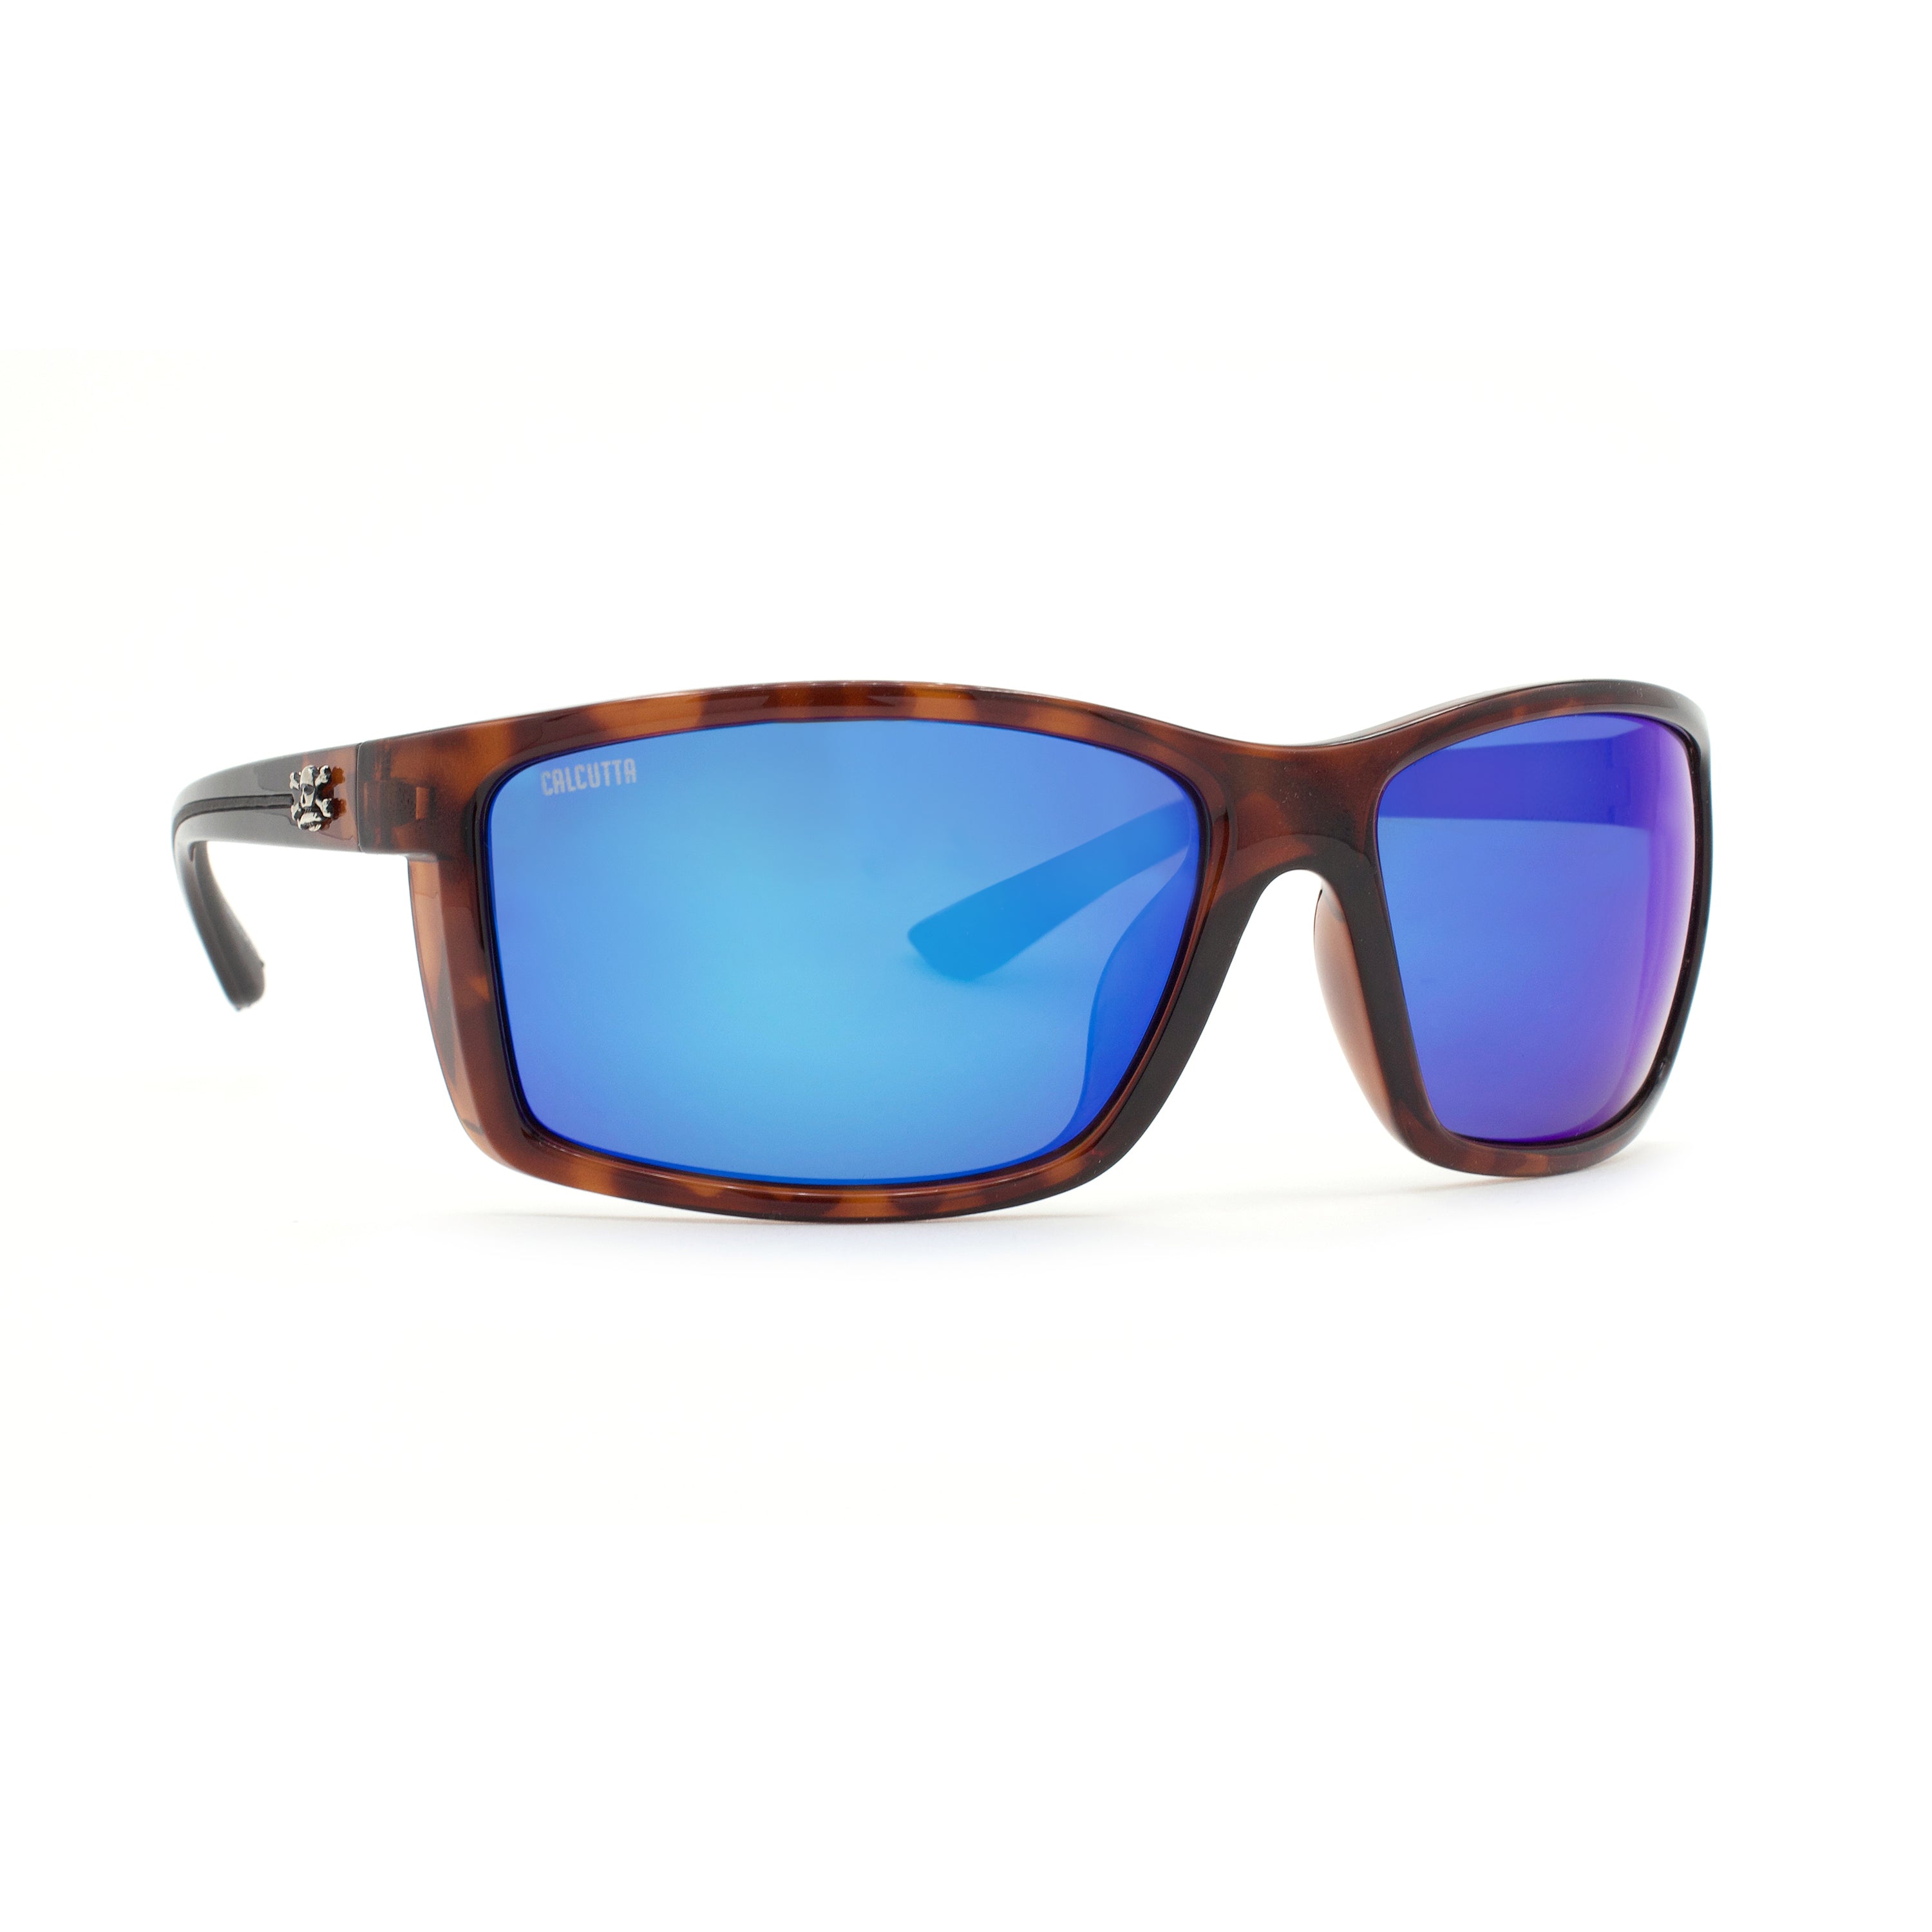 Calcutta Shoal Sunglasses - Tortoise Frame / Blue Mirror